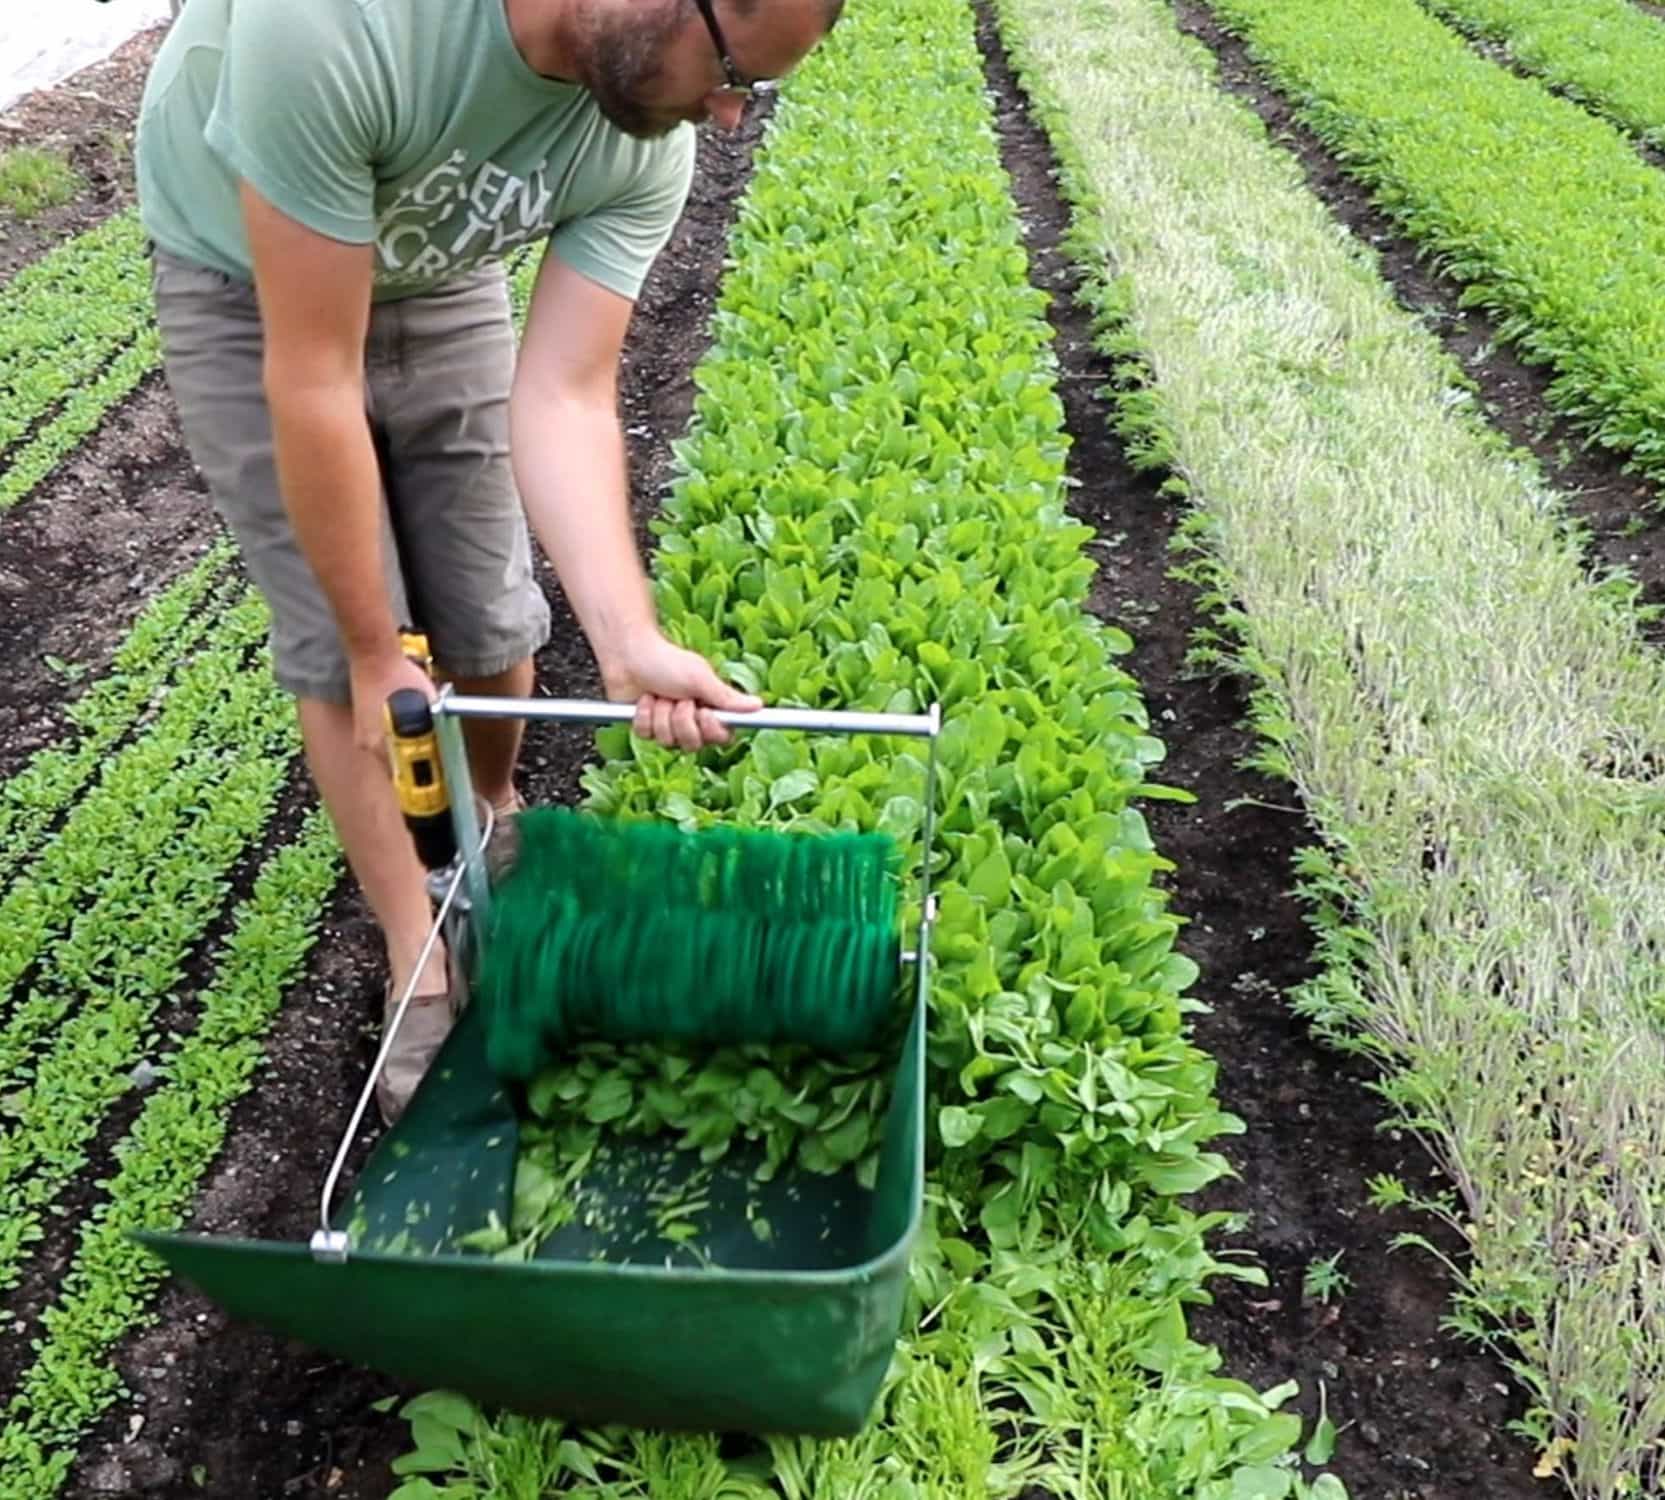 The Quick Cut Greens Harvester | The Urban Farmer